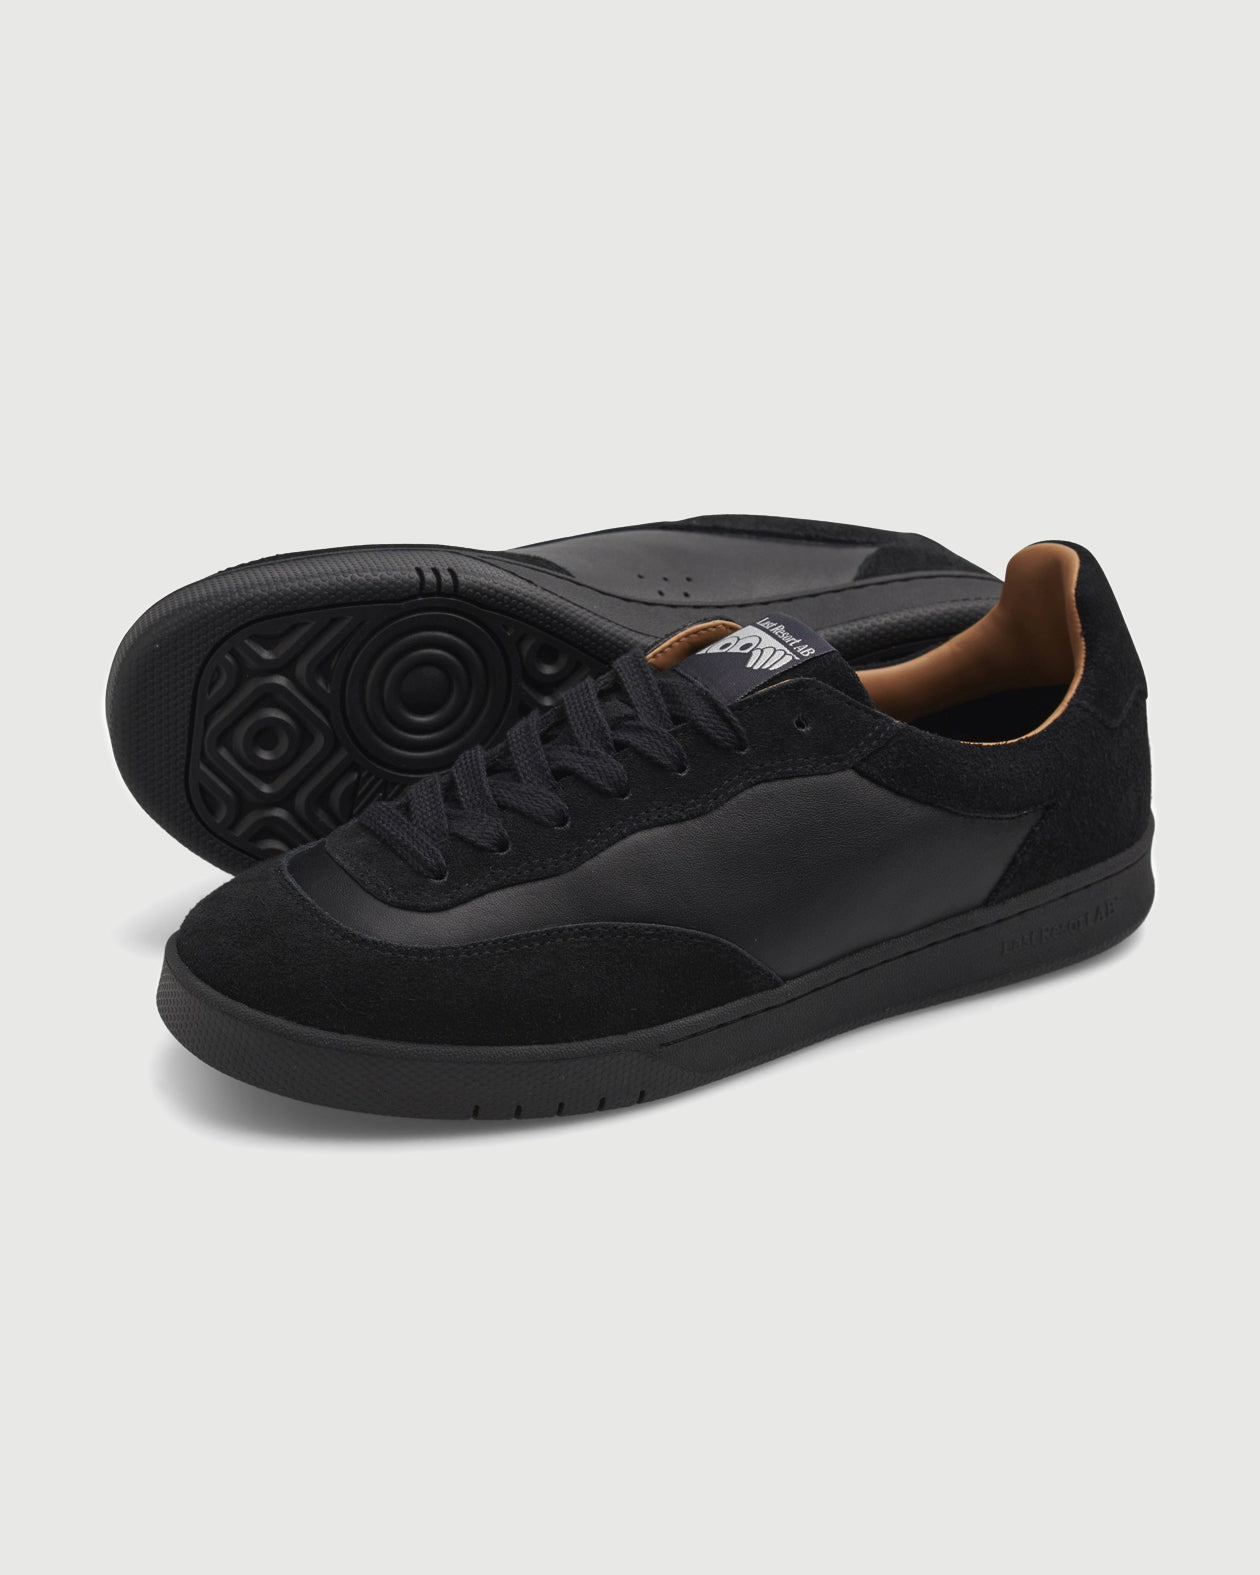 Last Resort AB CM001 Suede/Leather Lo (Black/Black) Shoes Sneakers Unisex